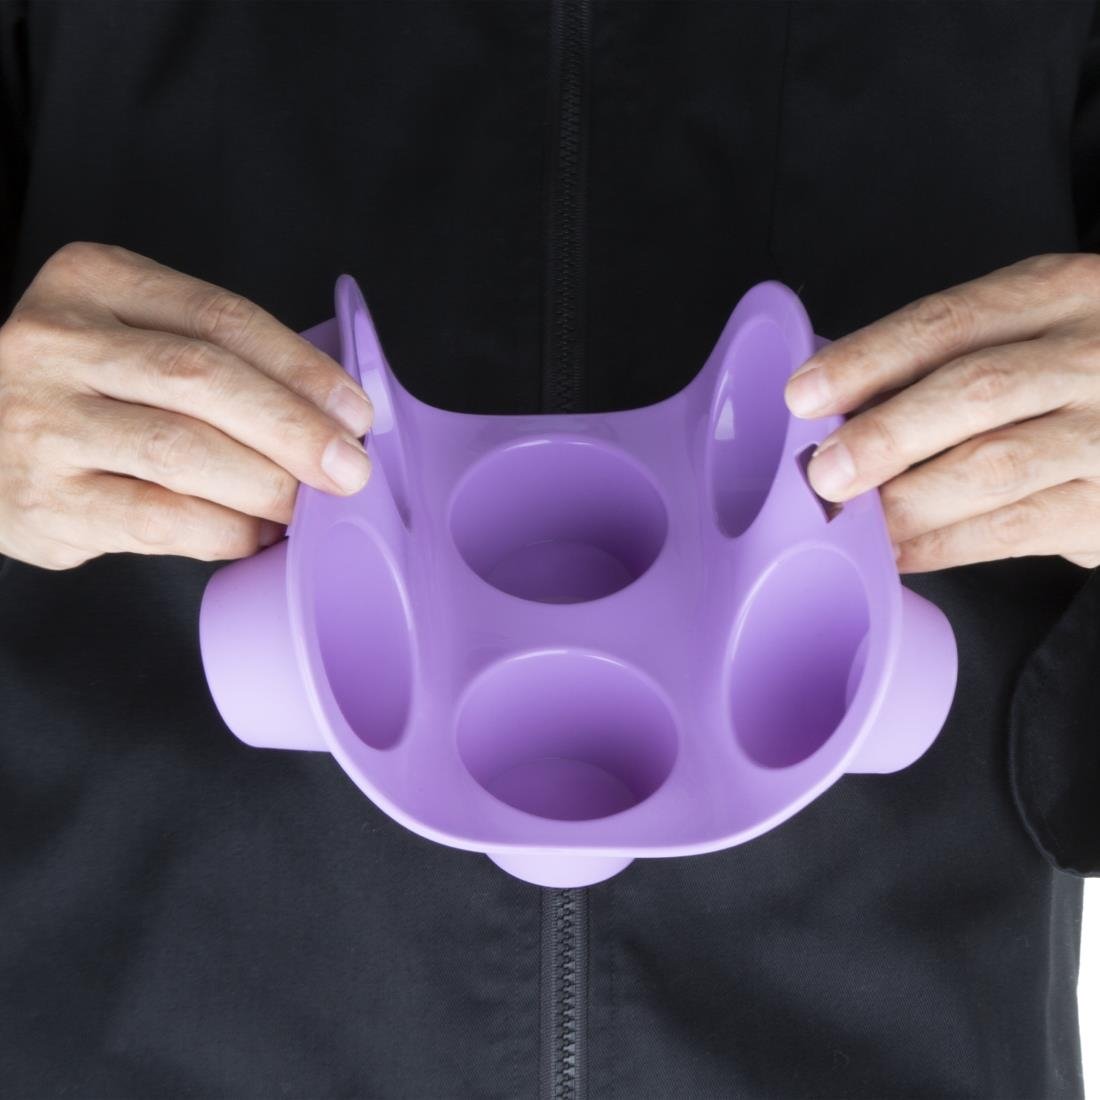 Moule 6 muffins flexible en silicone Hygiplas violet 